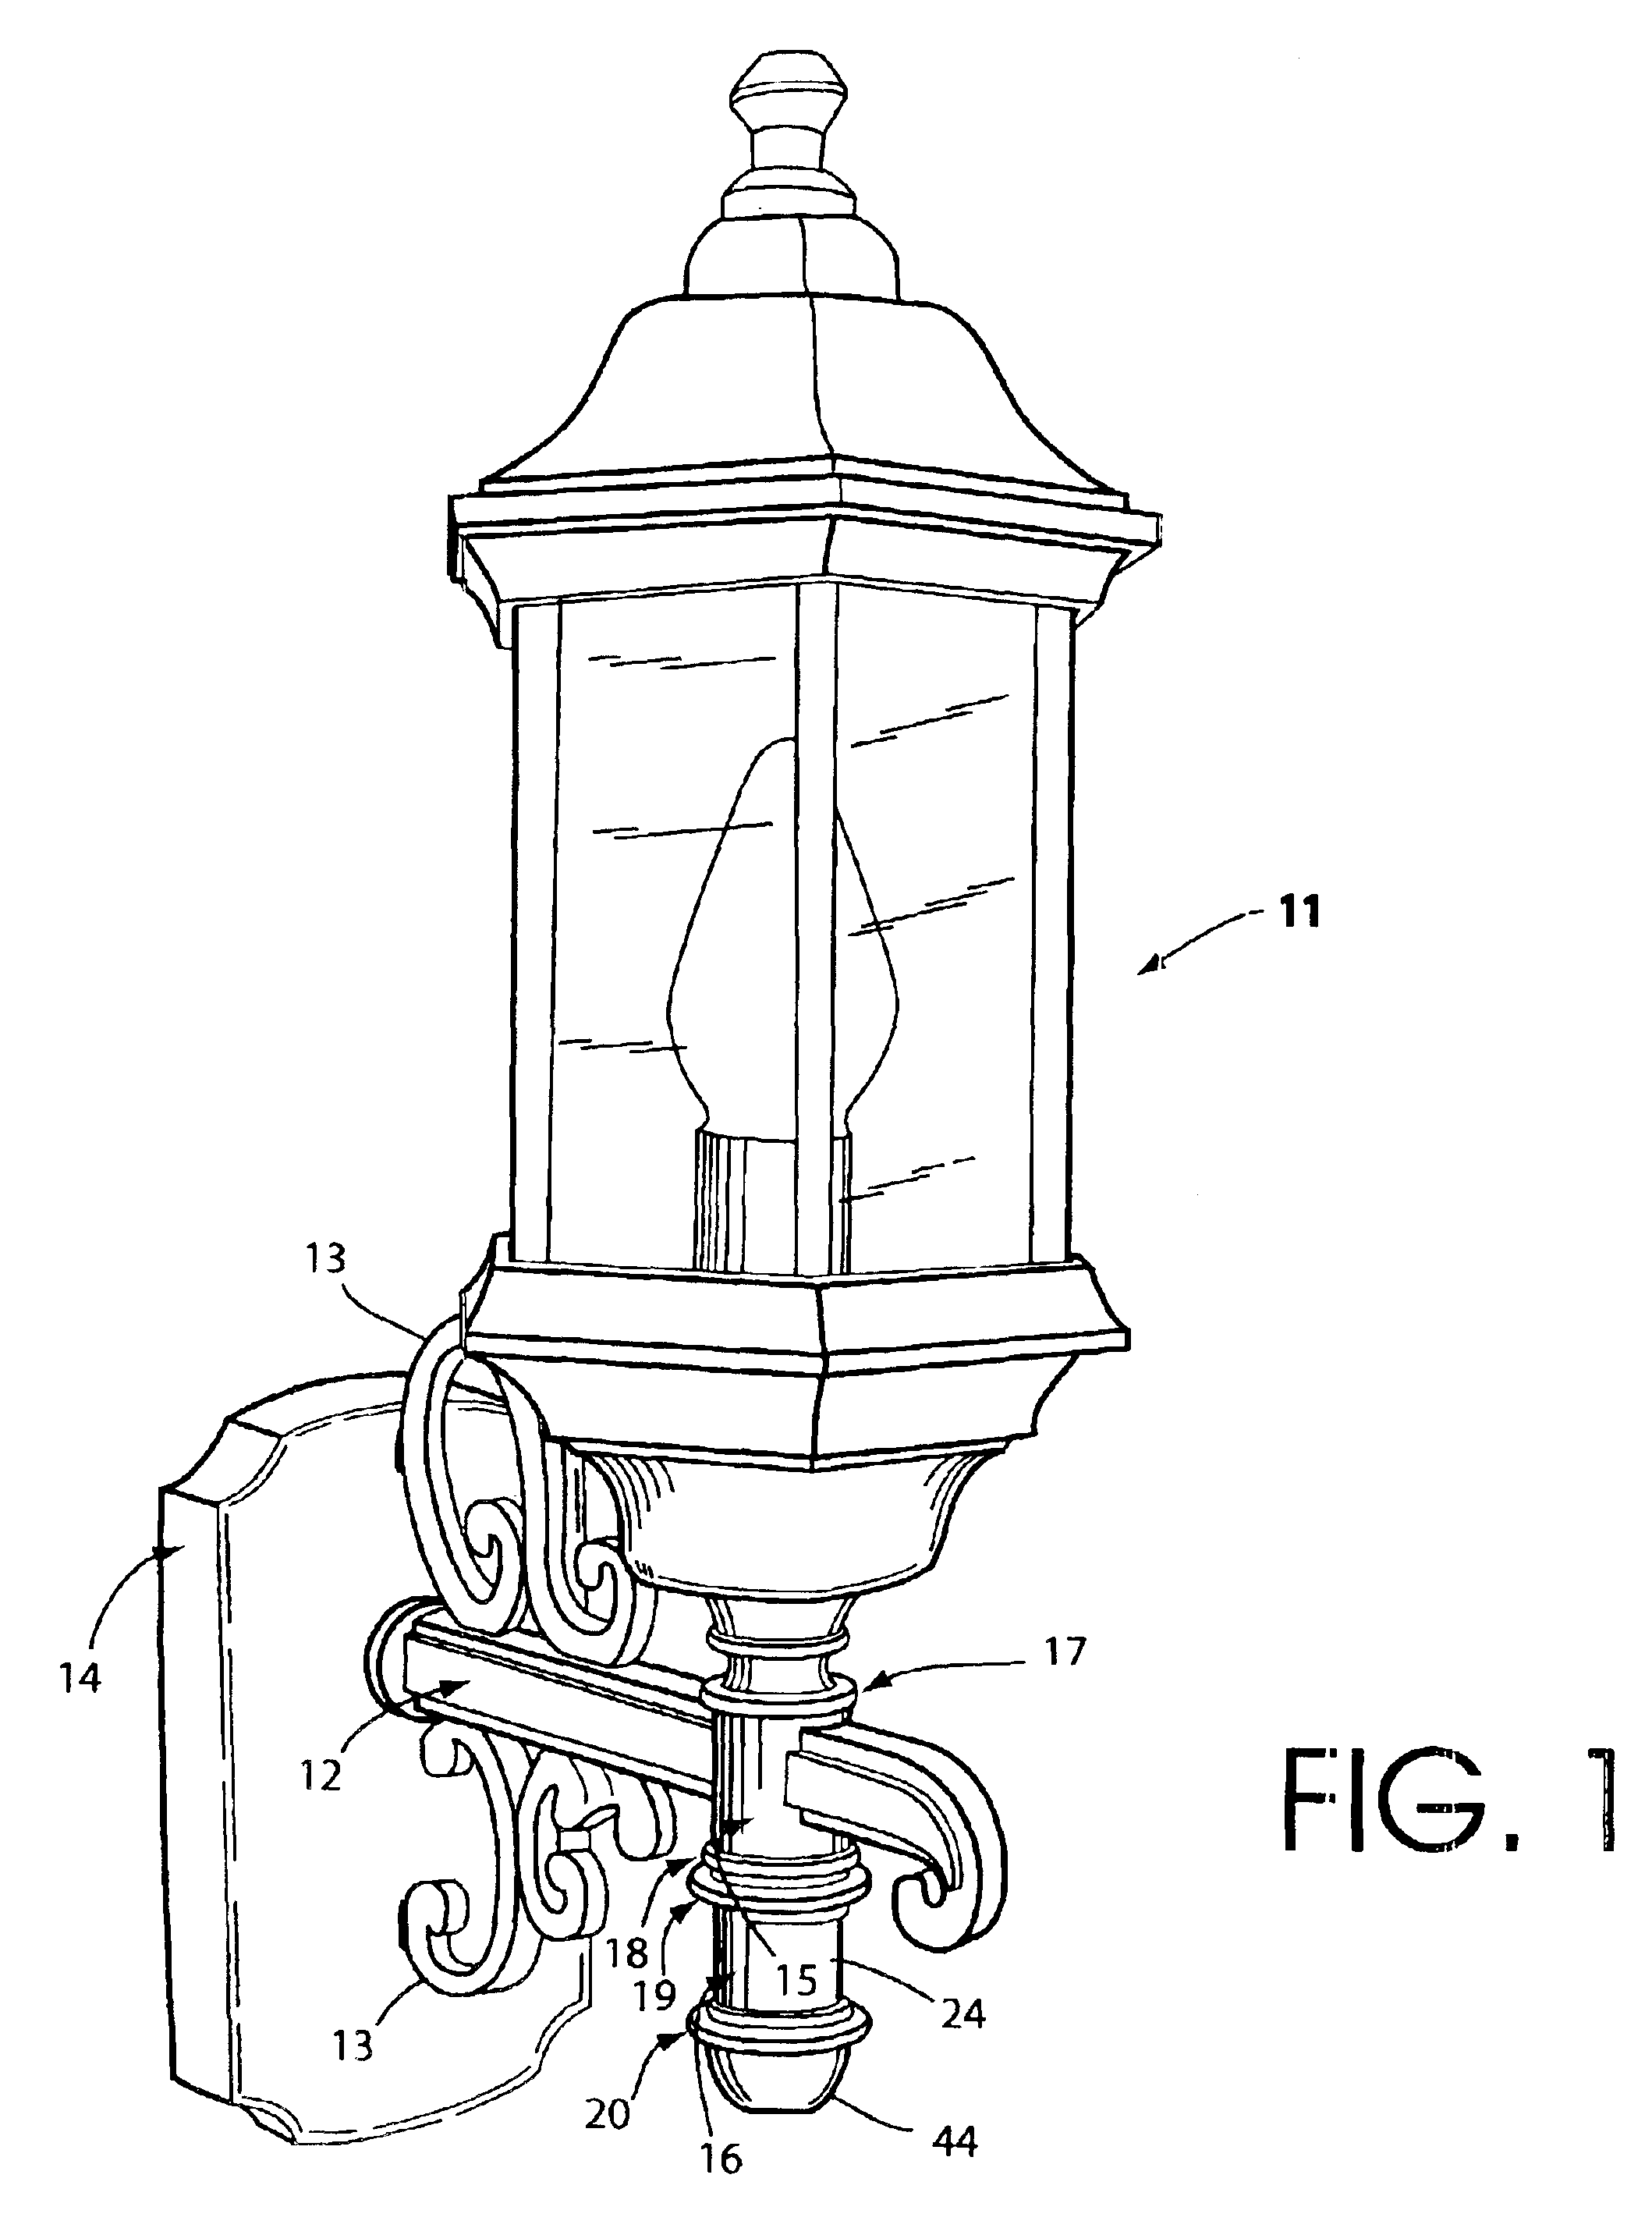 PIR motion detector for a decorative lantern